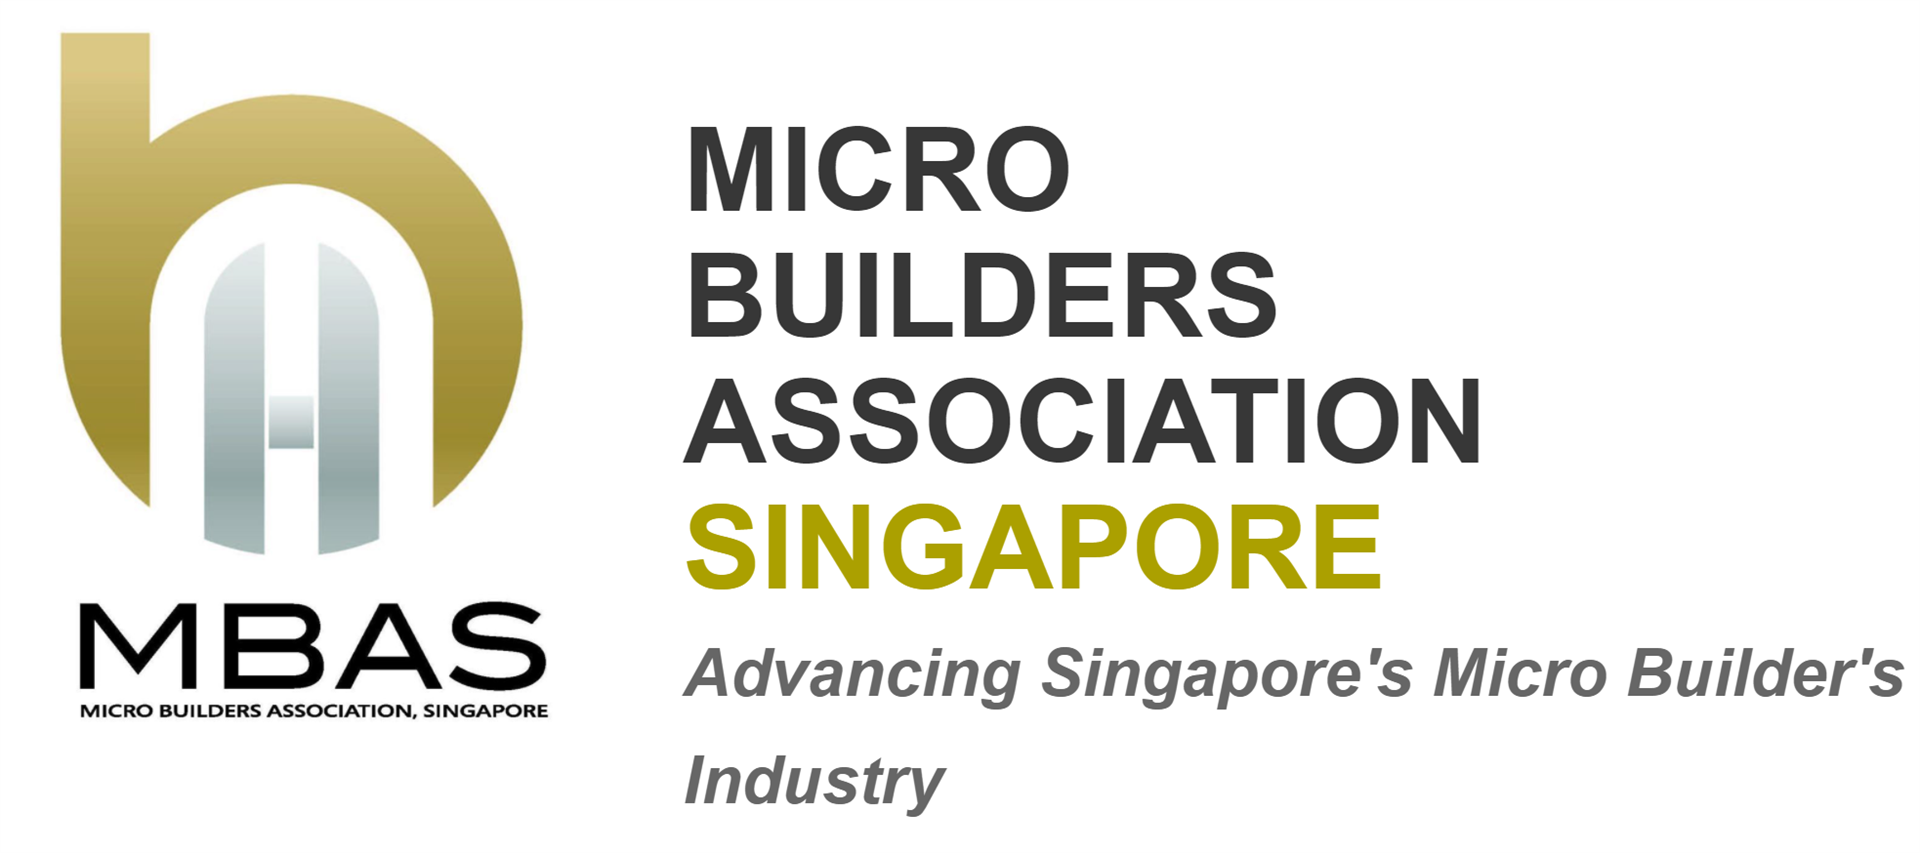 Micro Builders Association, Singapore